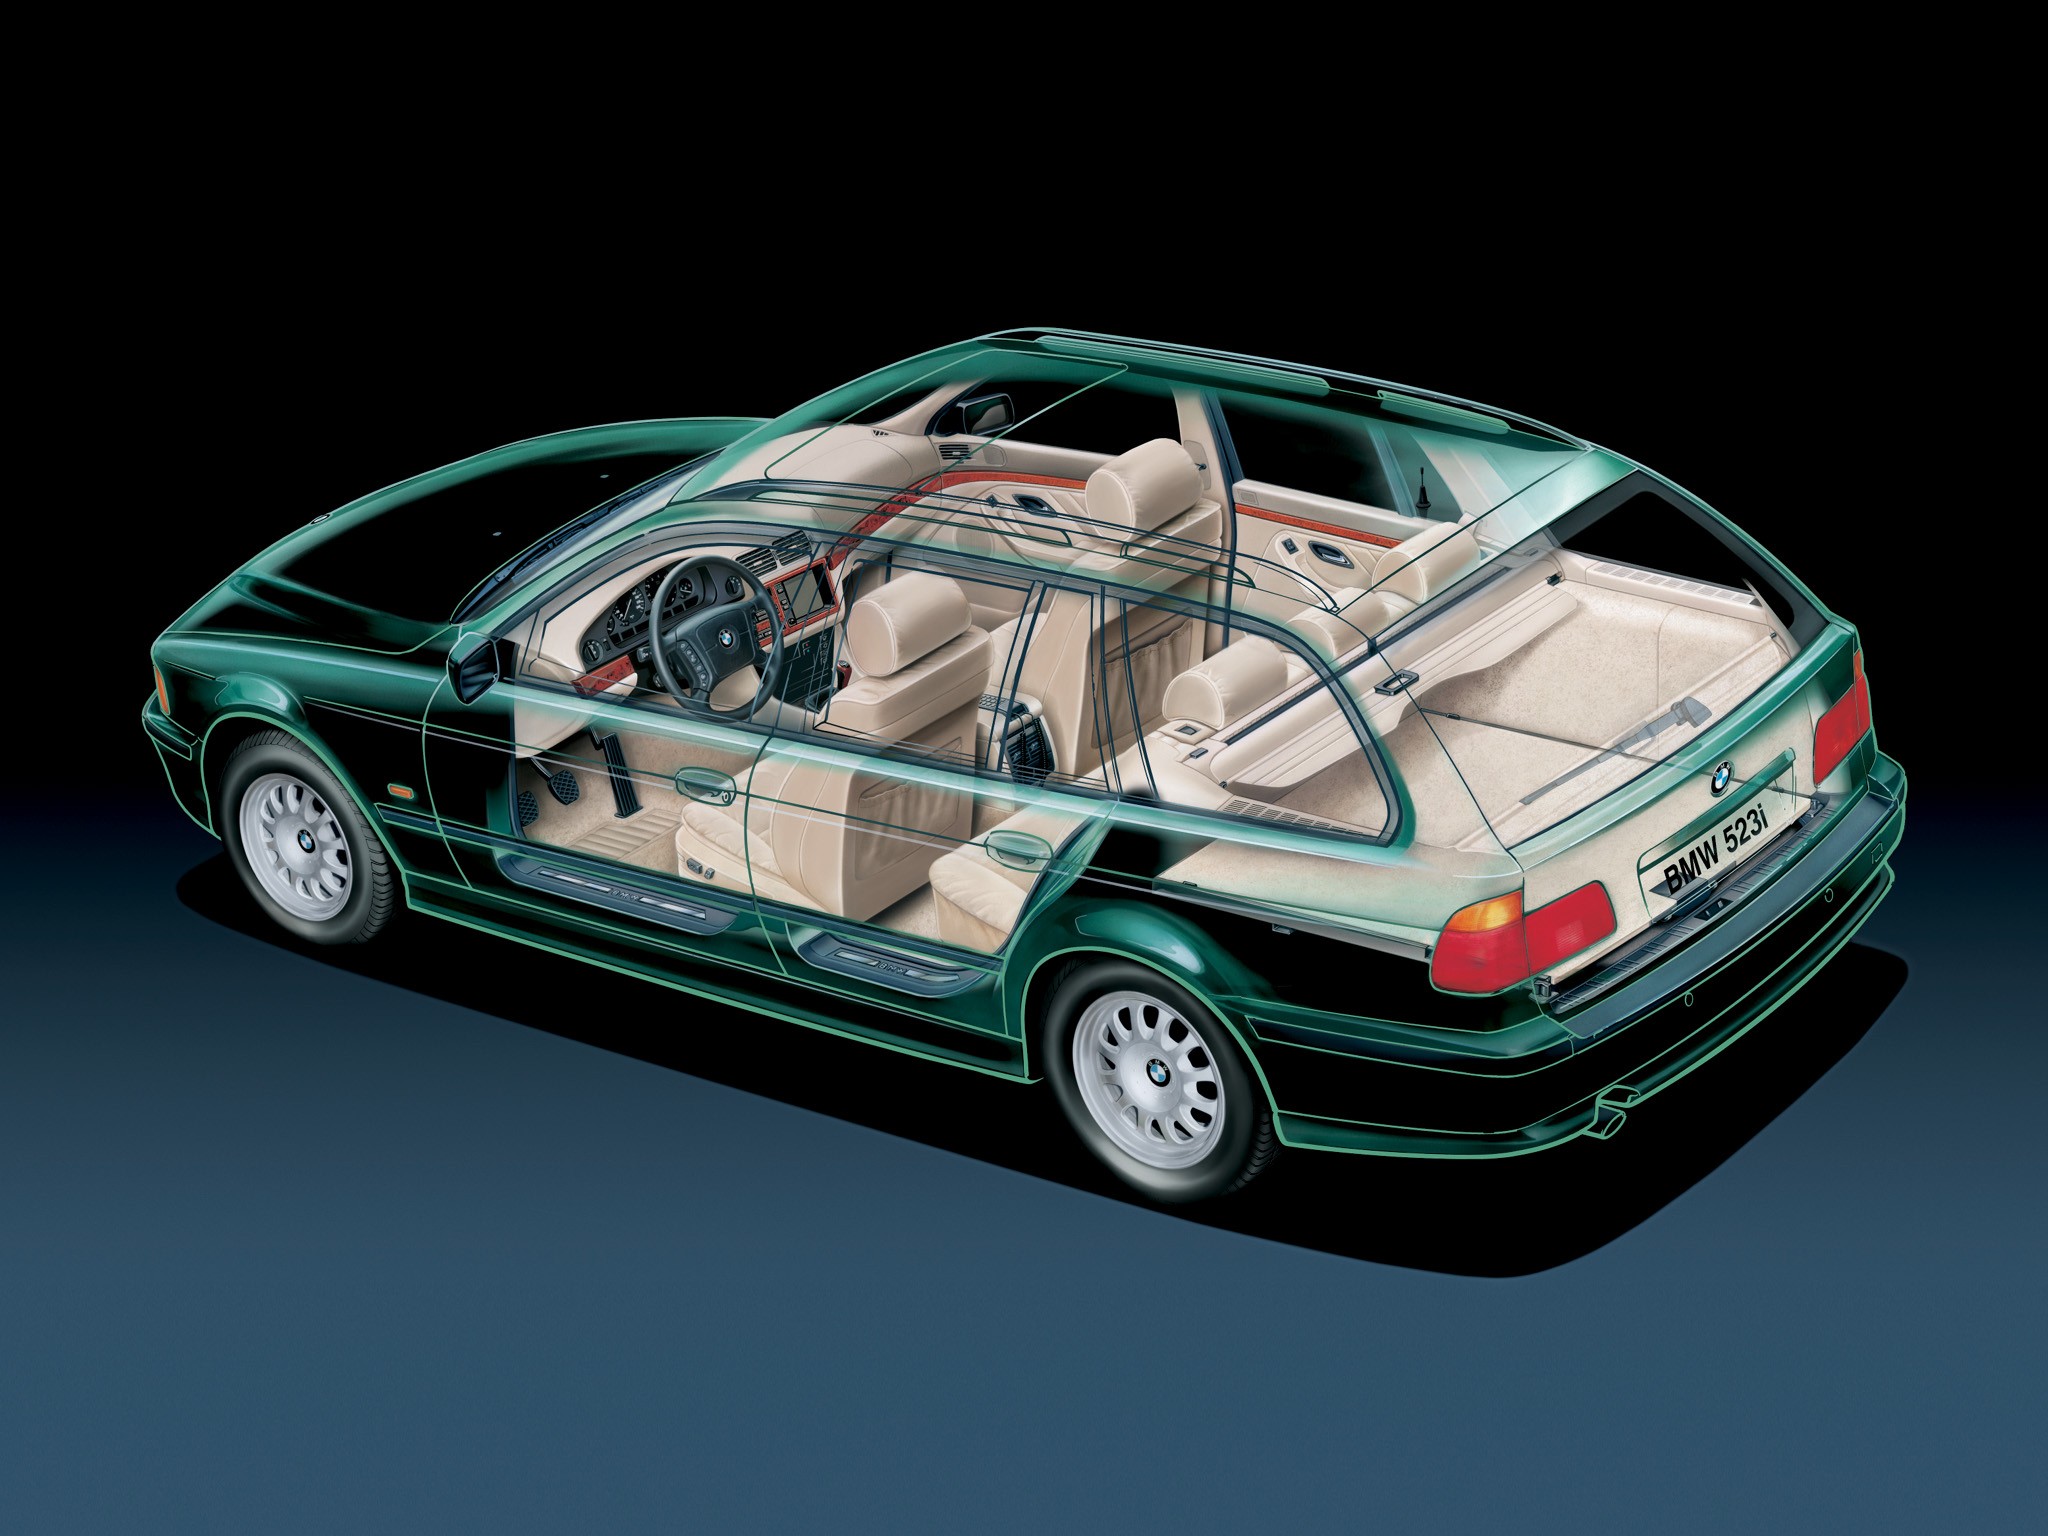 BMW E39 5 Series M5 specs, dimensions